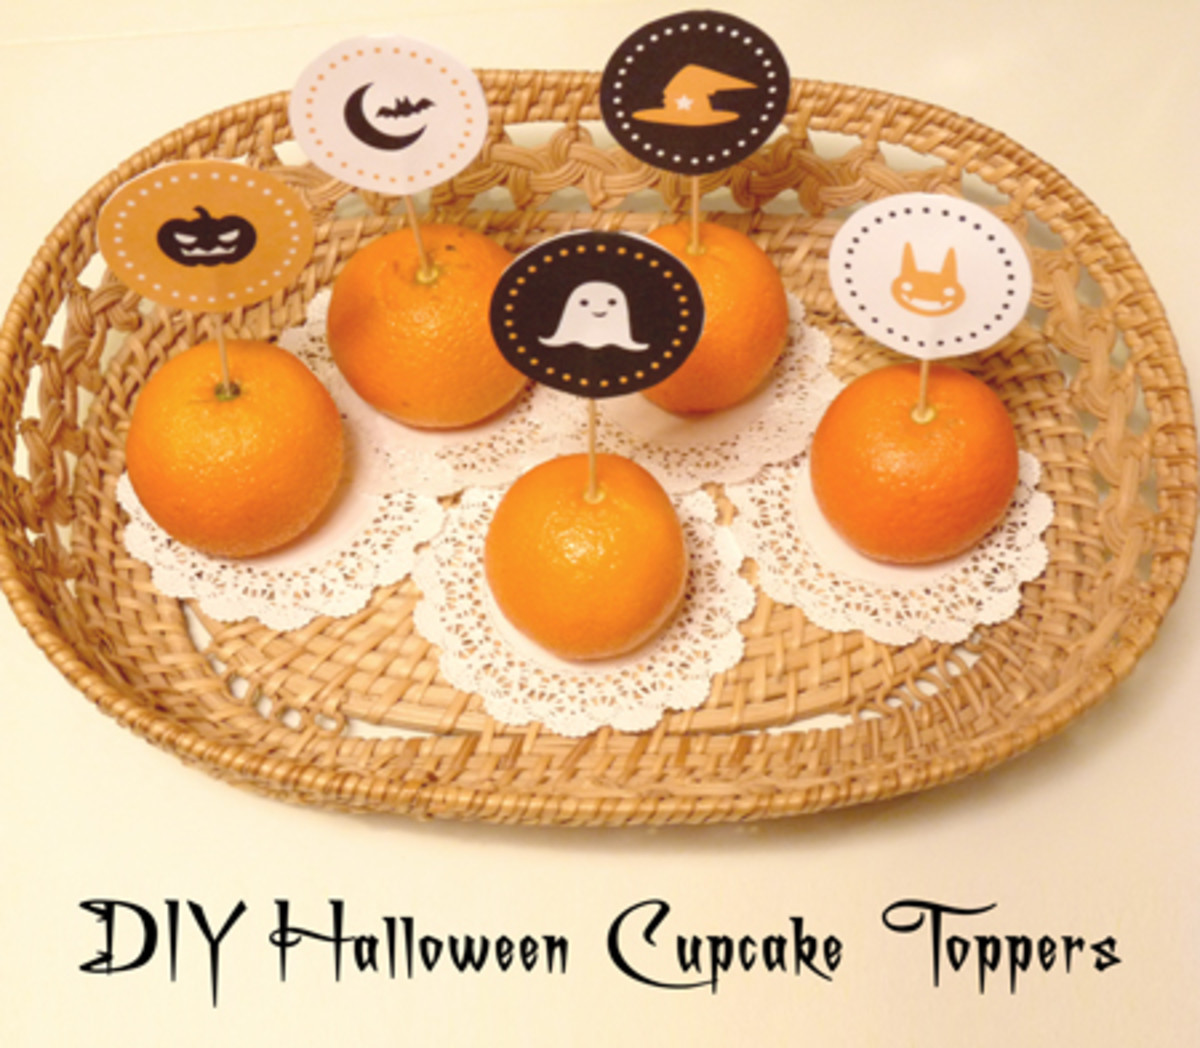 Free printable Halloween cupcake toppers